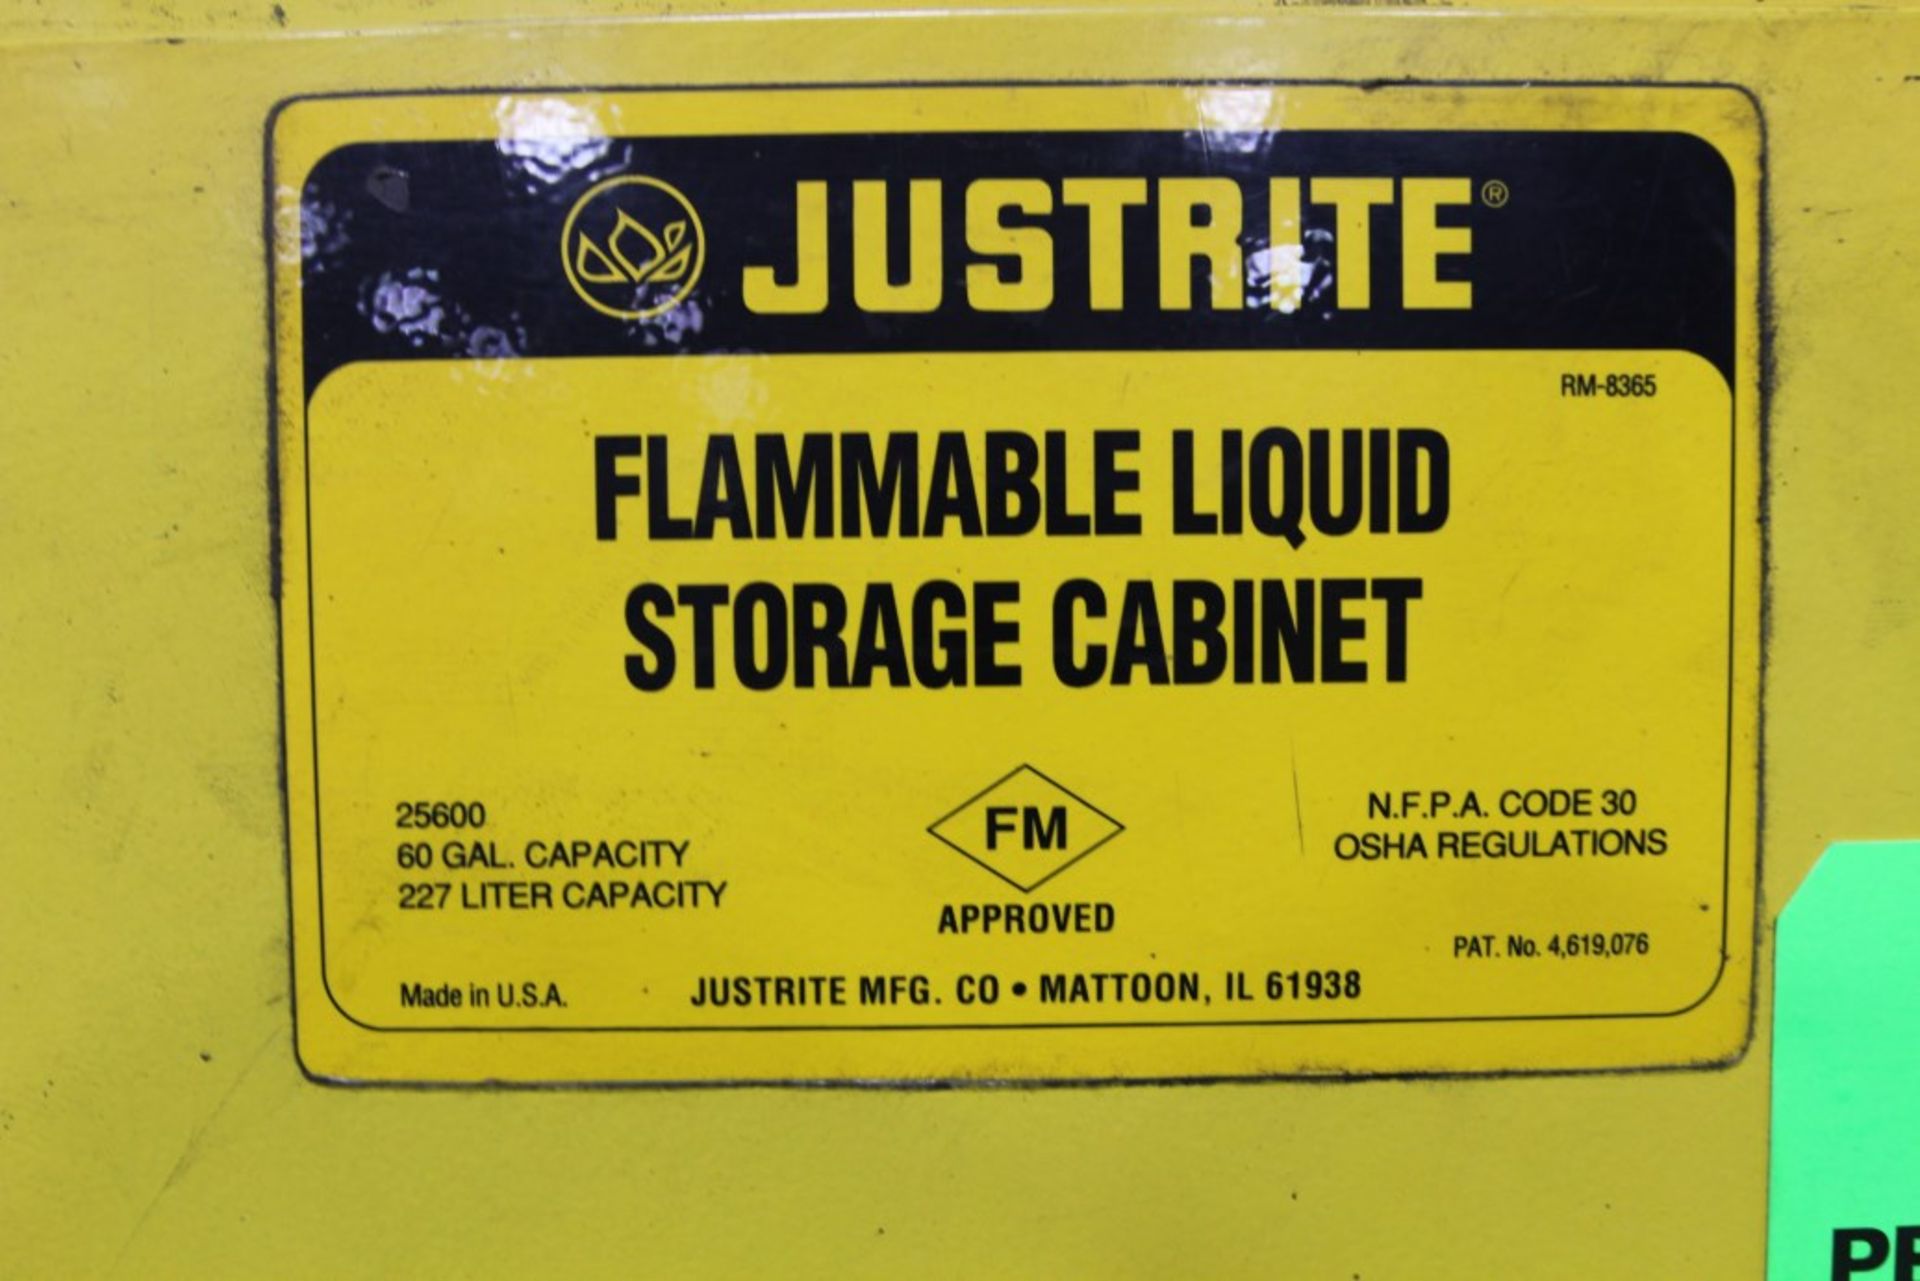 Justrite 25600 60 Gal Capacity Flammable Liquid Storage Cabinet - Image 2 of 2